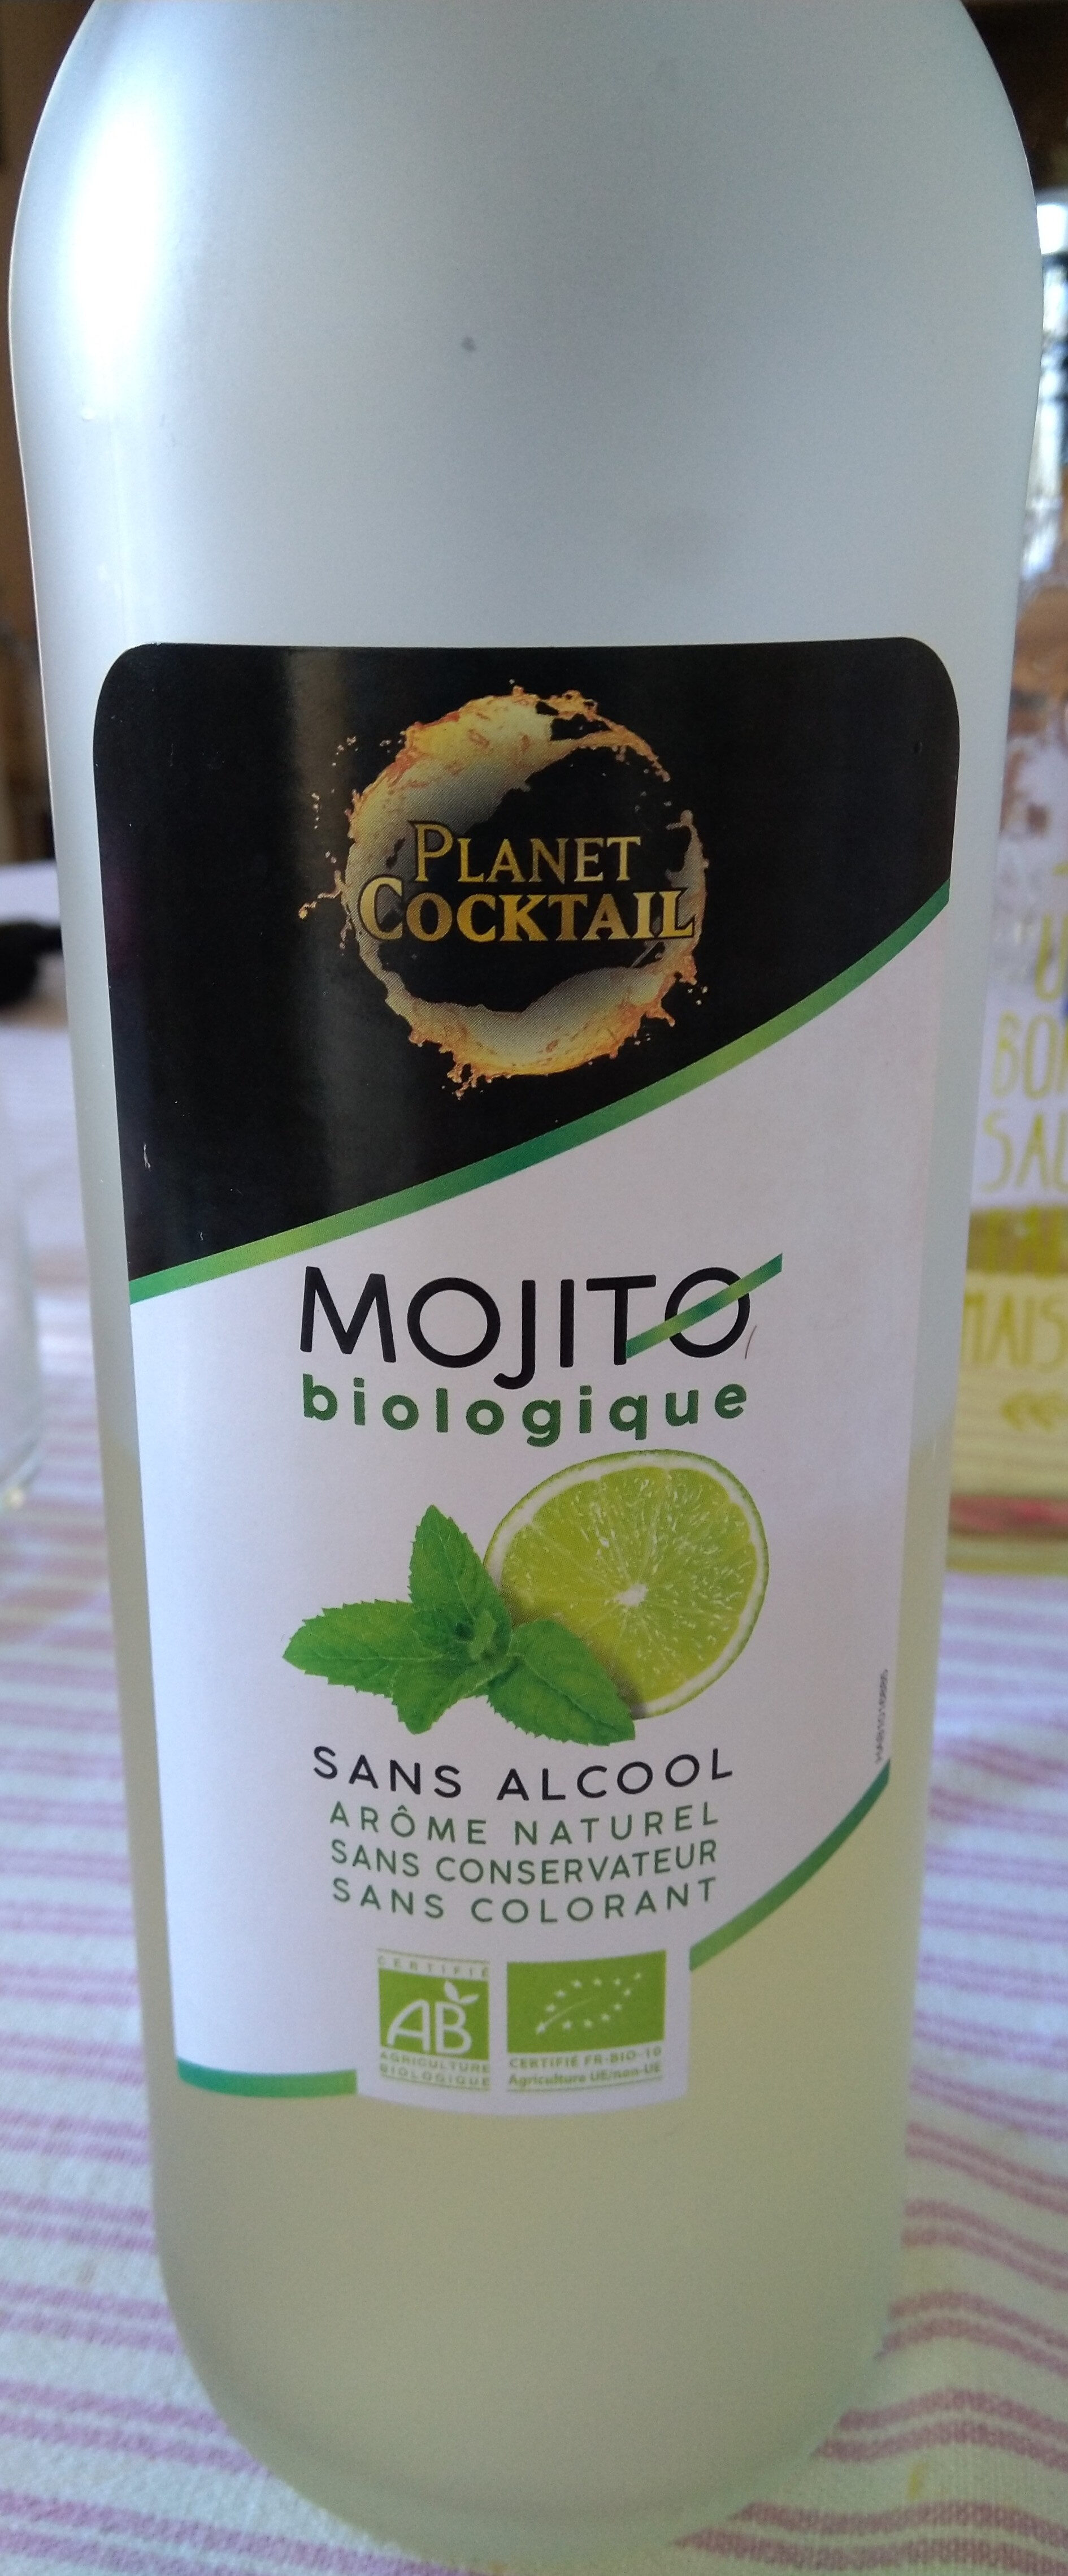 Mojito biologique - Product - fr